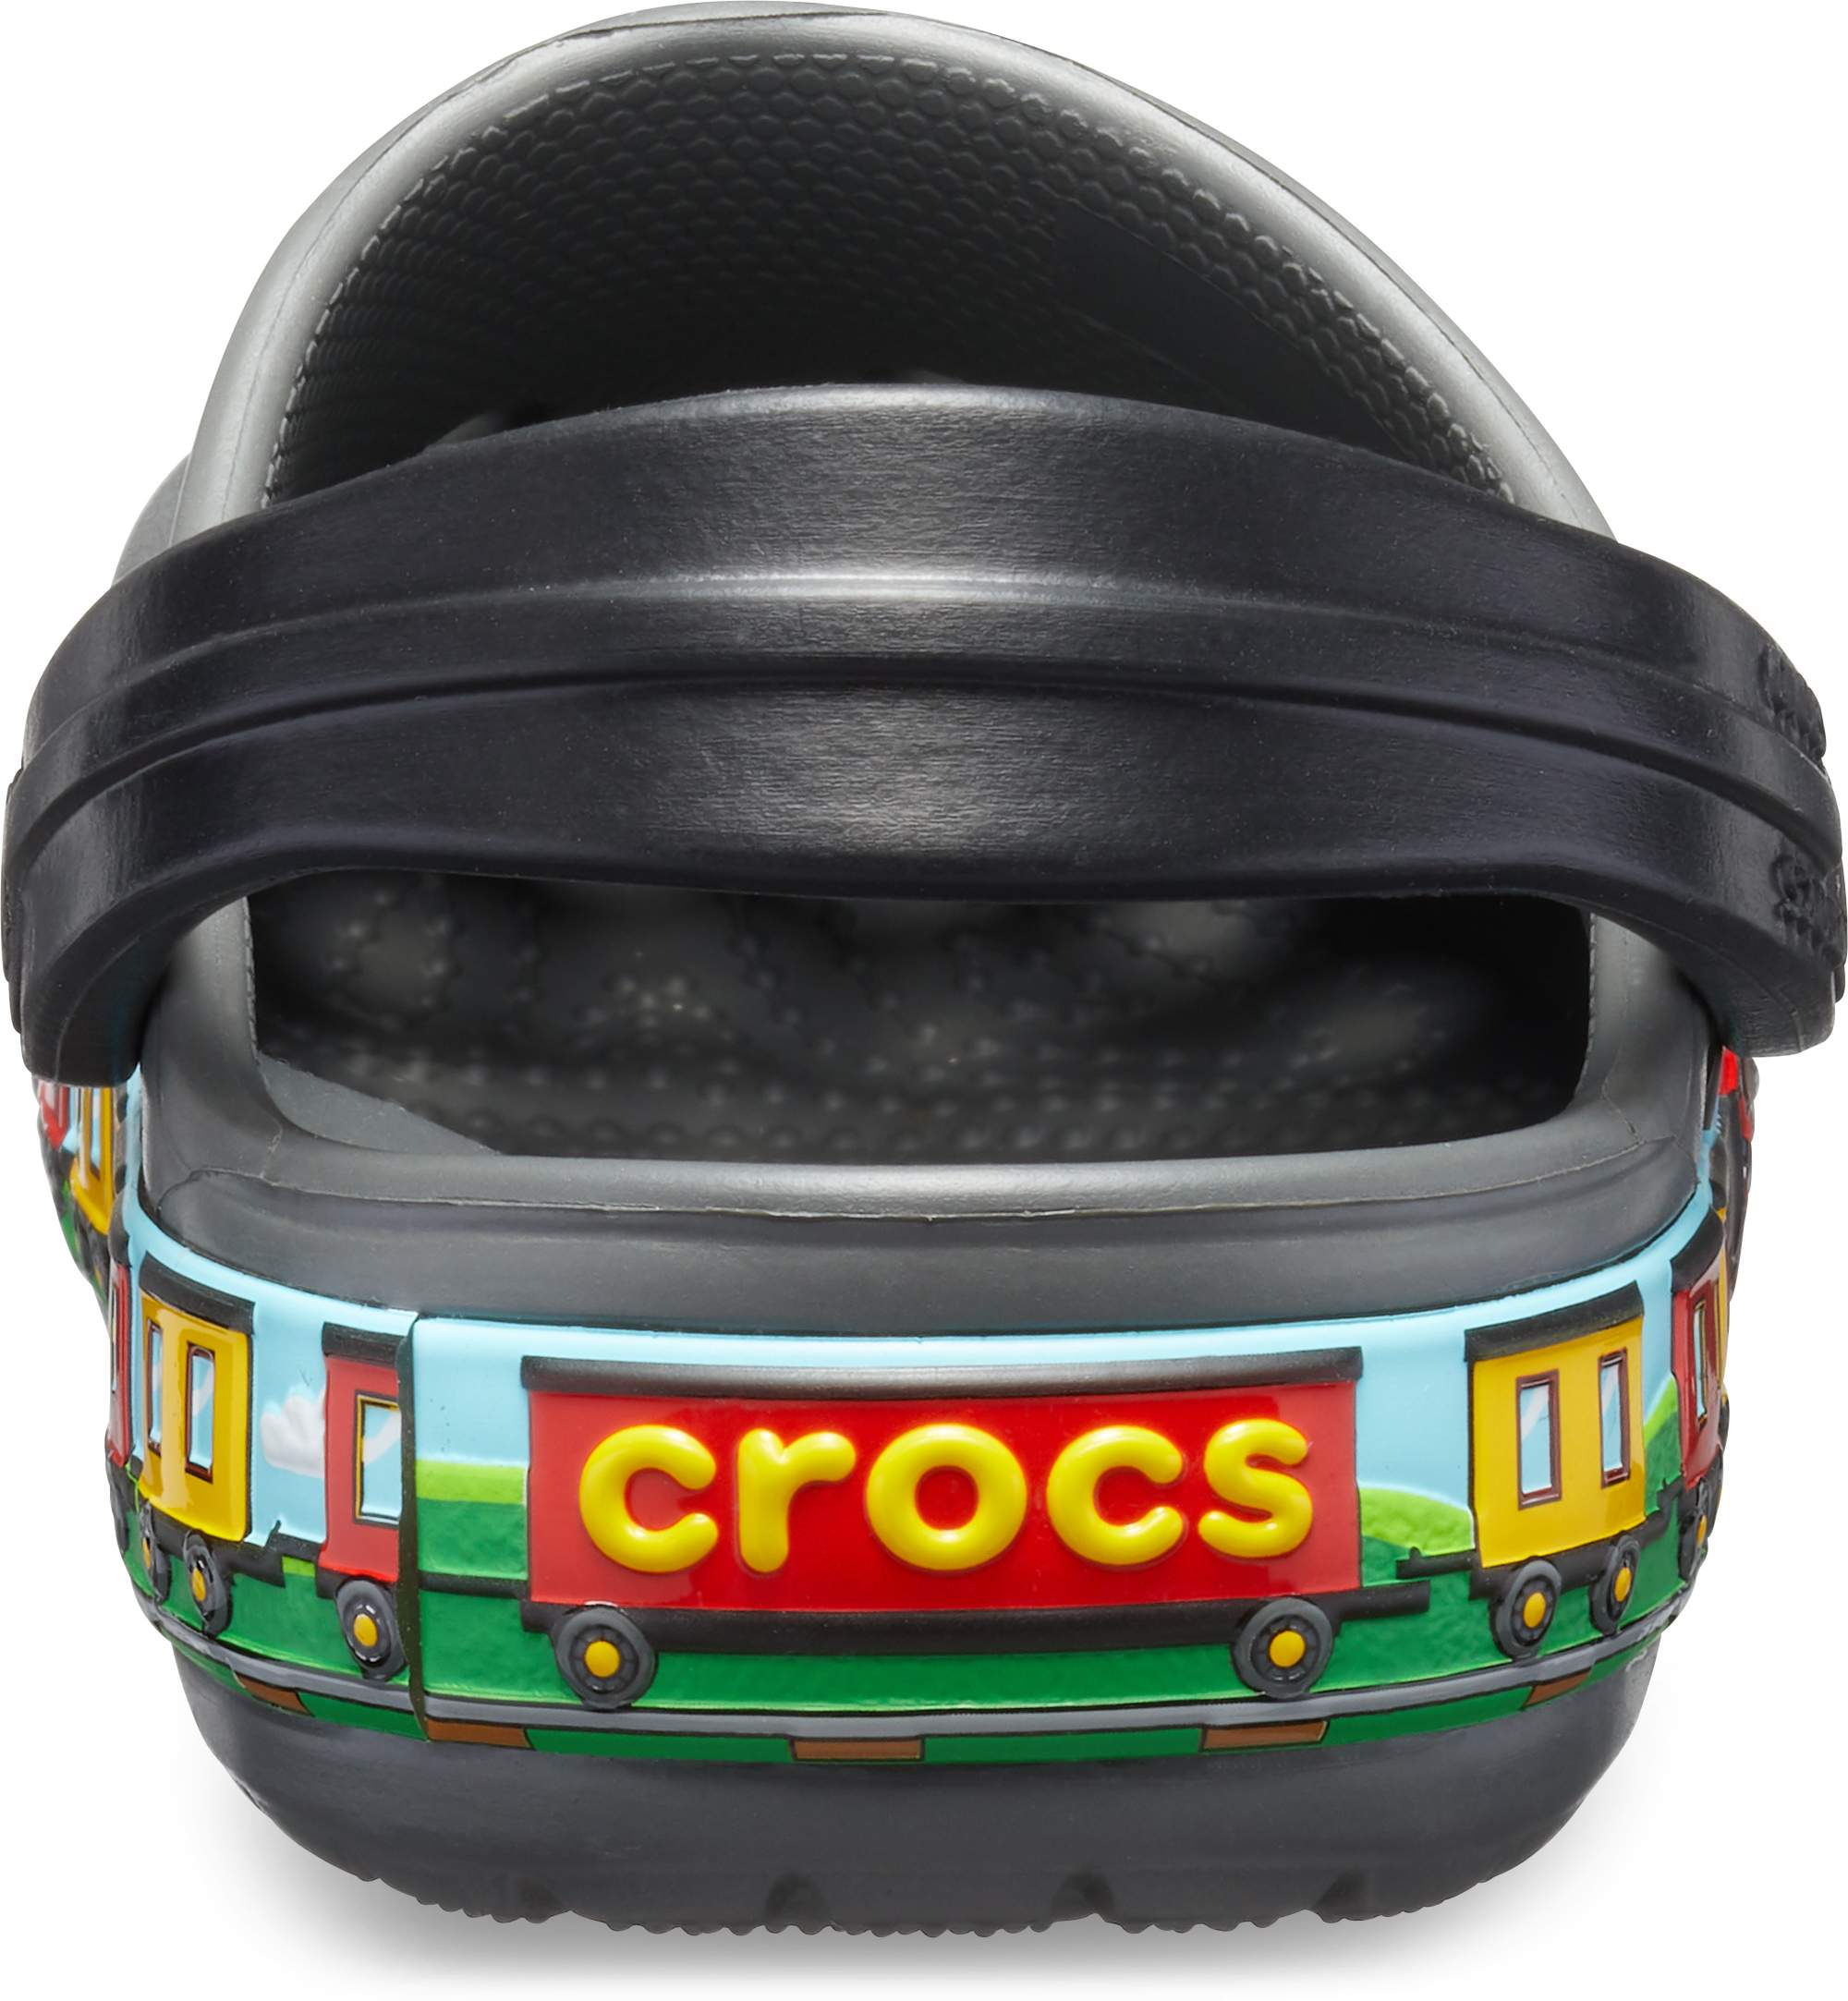 crocs train clog